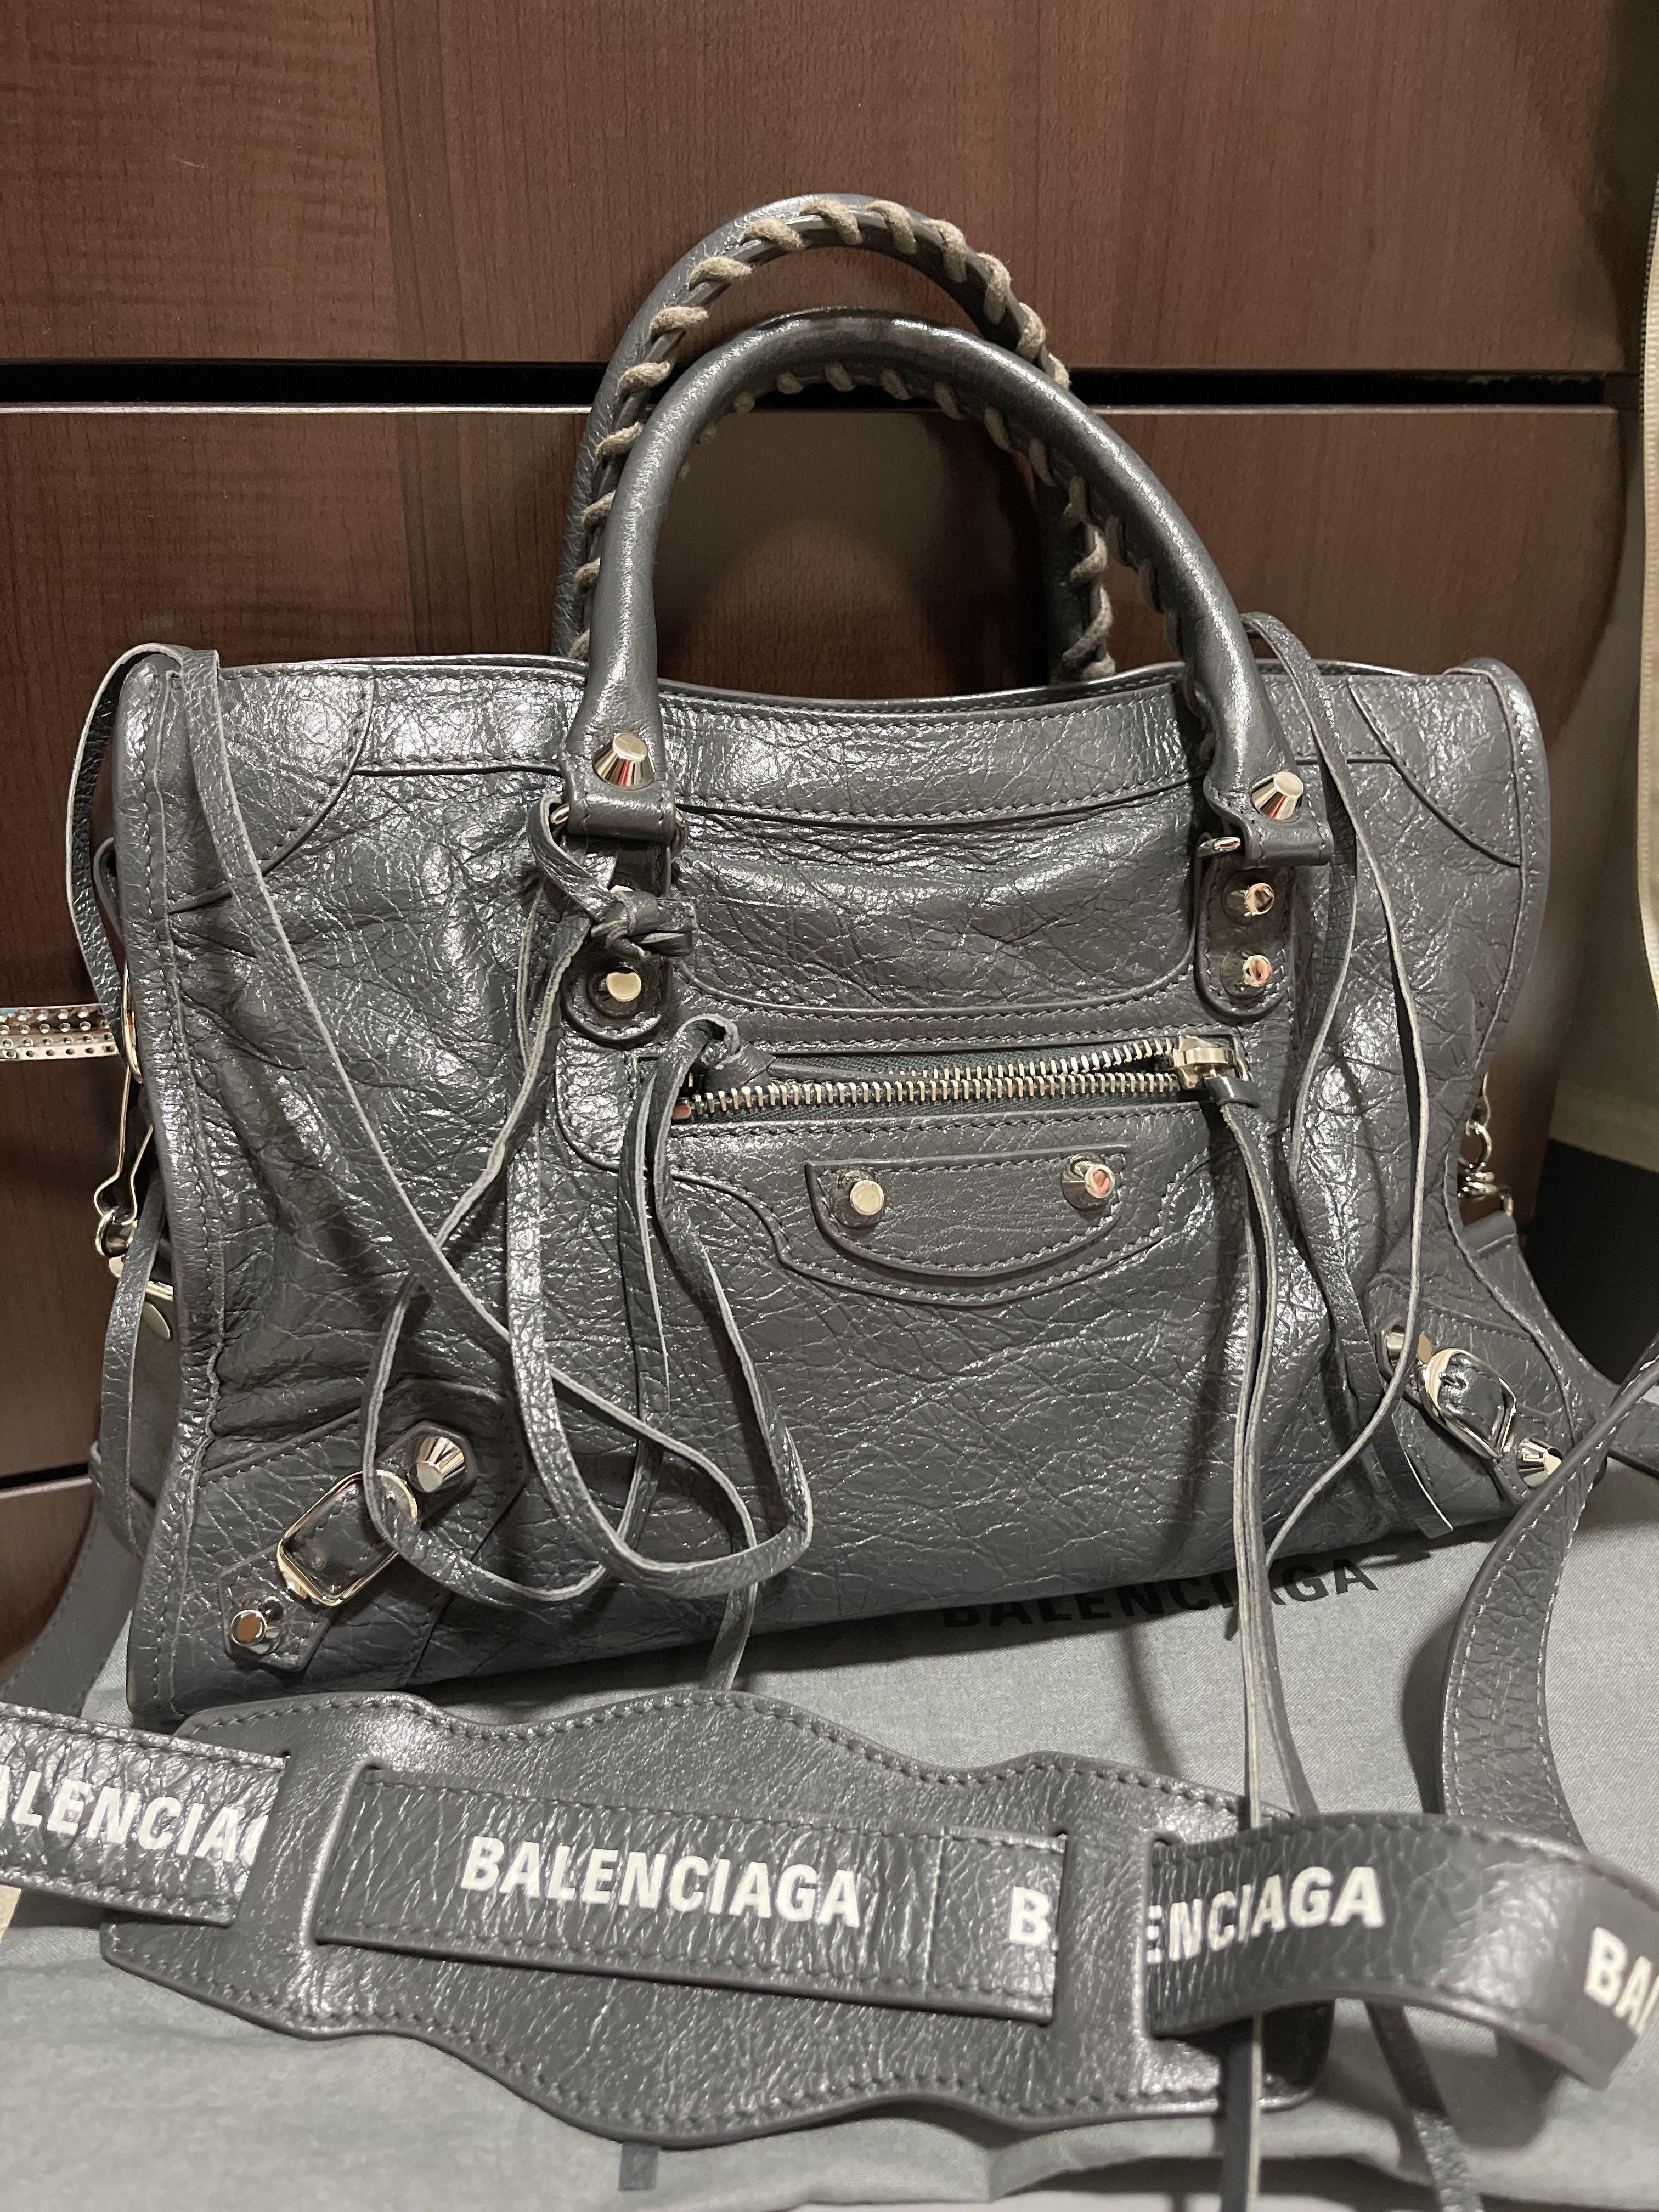 2 straps- Authentic balenciaga city bag in grey